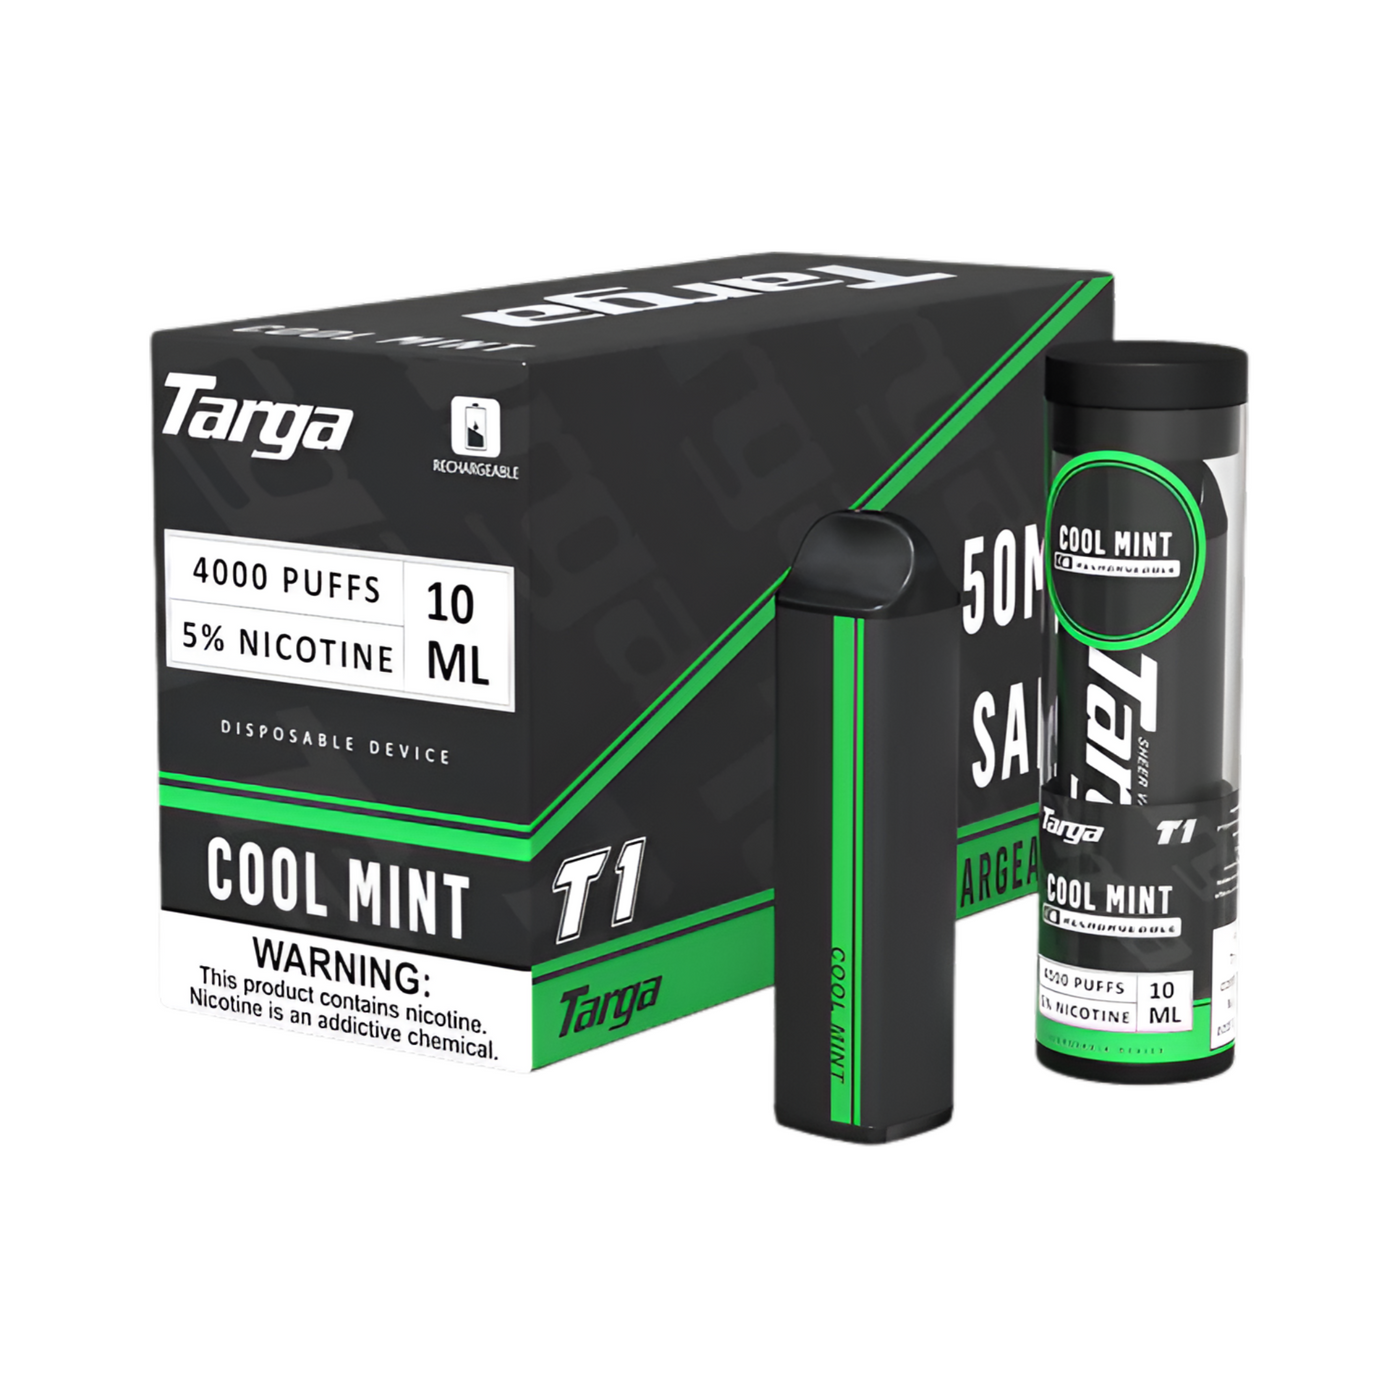 Targa 4000 Puff Cool Mint - Vaporizador Desechable